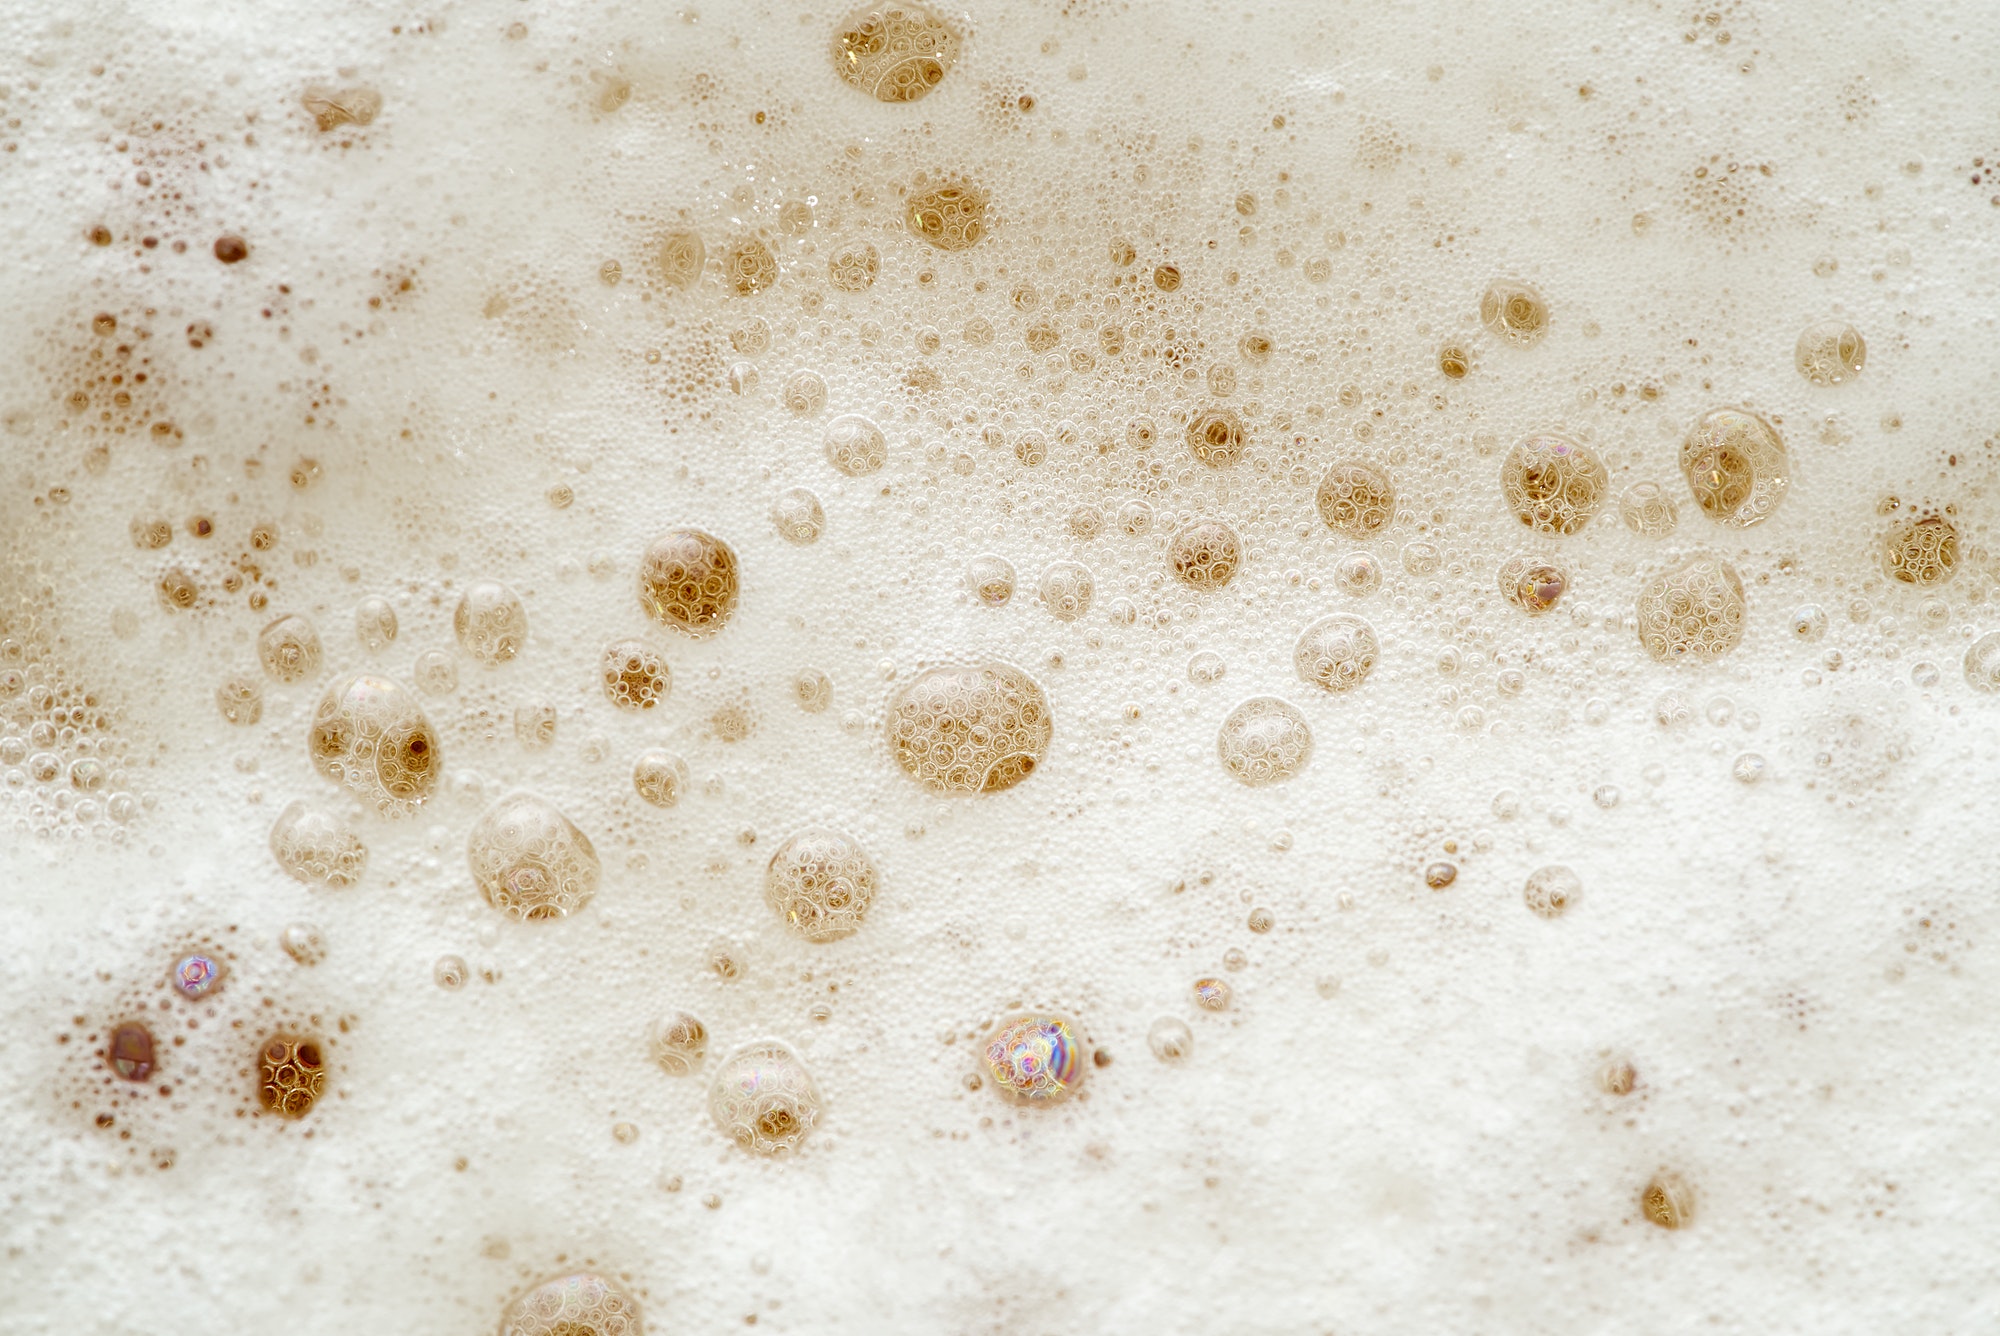 Fresh Beer foam texture. Macro detail of beer bubble and foam.